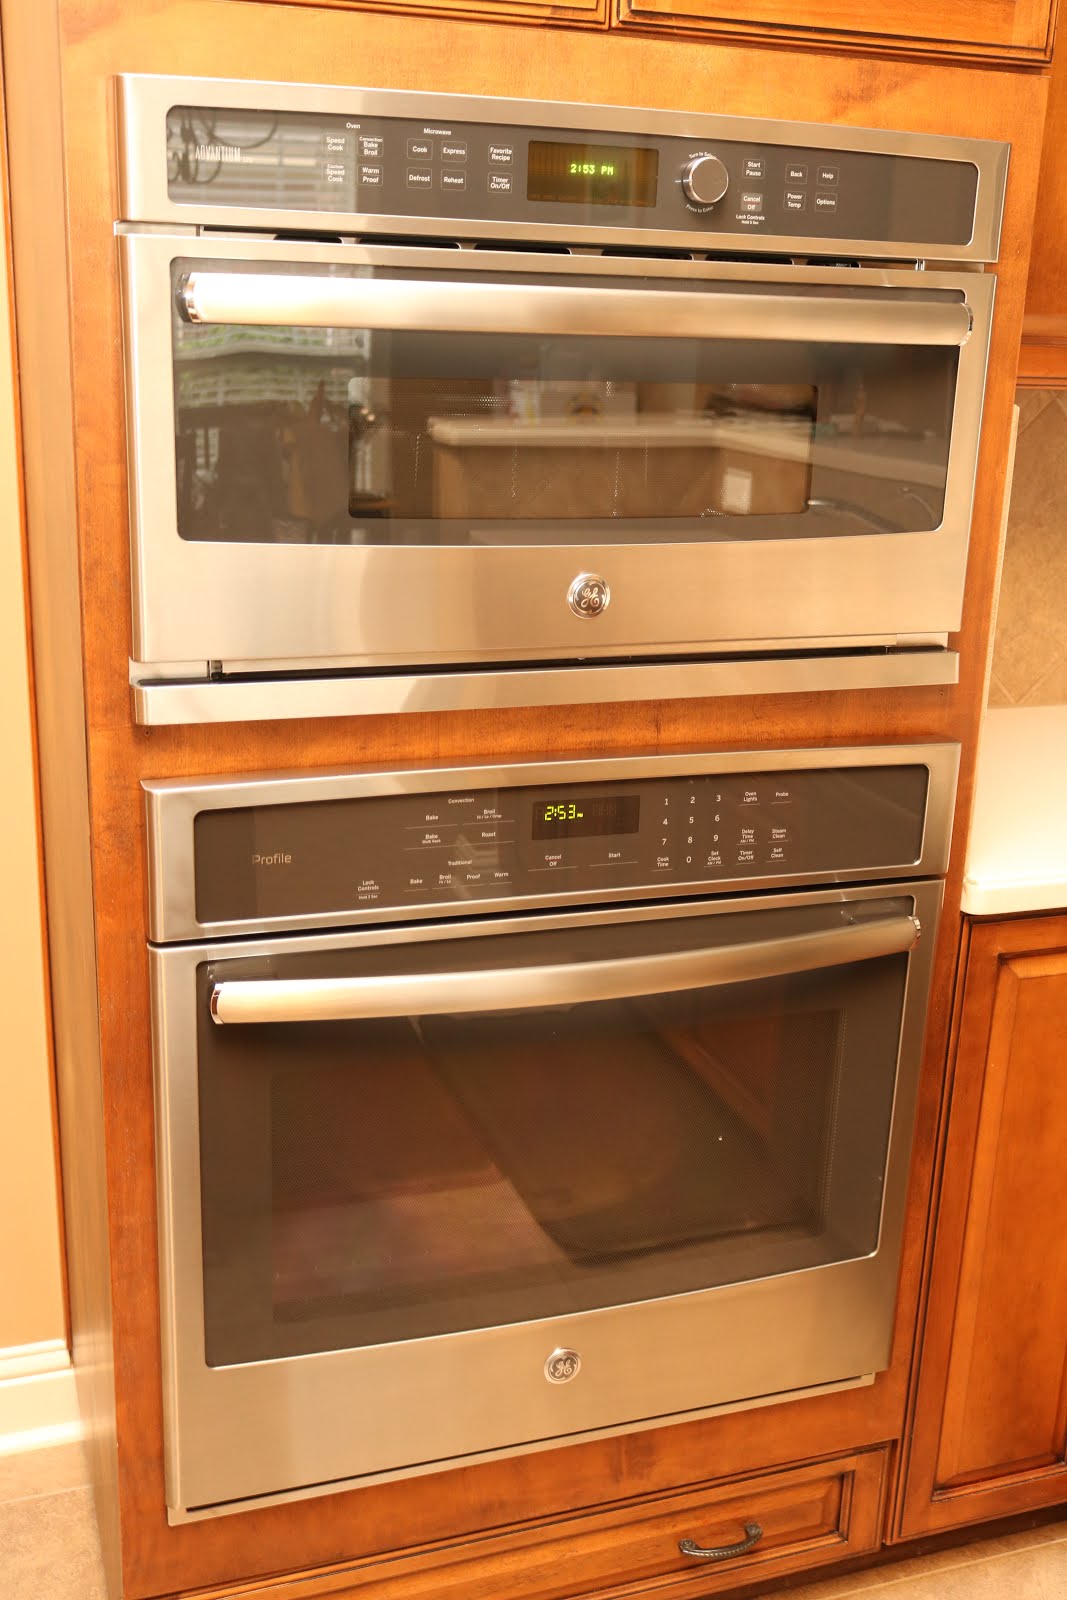 New Premium Double Ovens; GE Profile Oven & Advantium 4-in-one microwave/oven